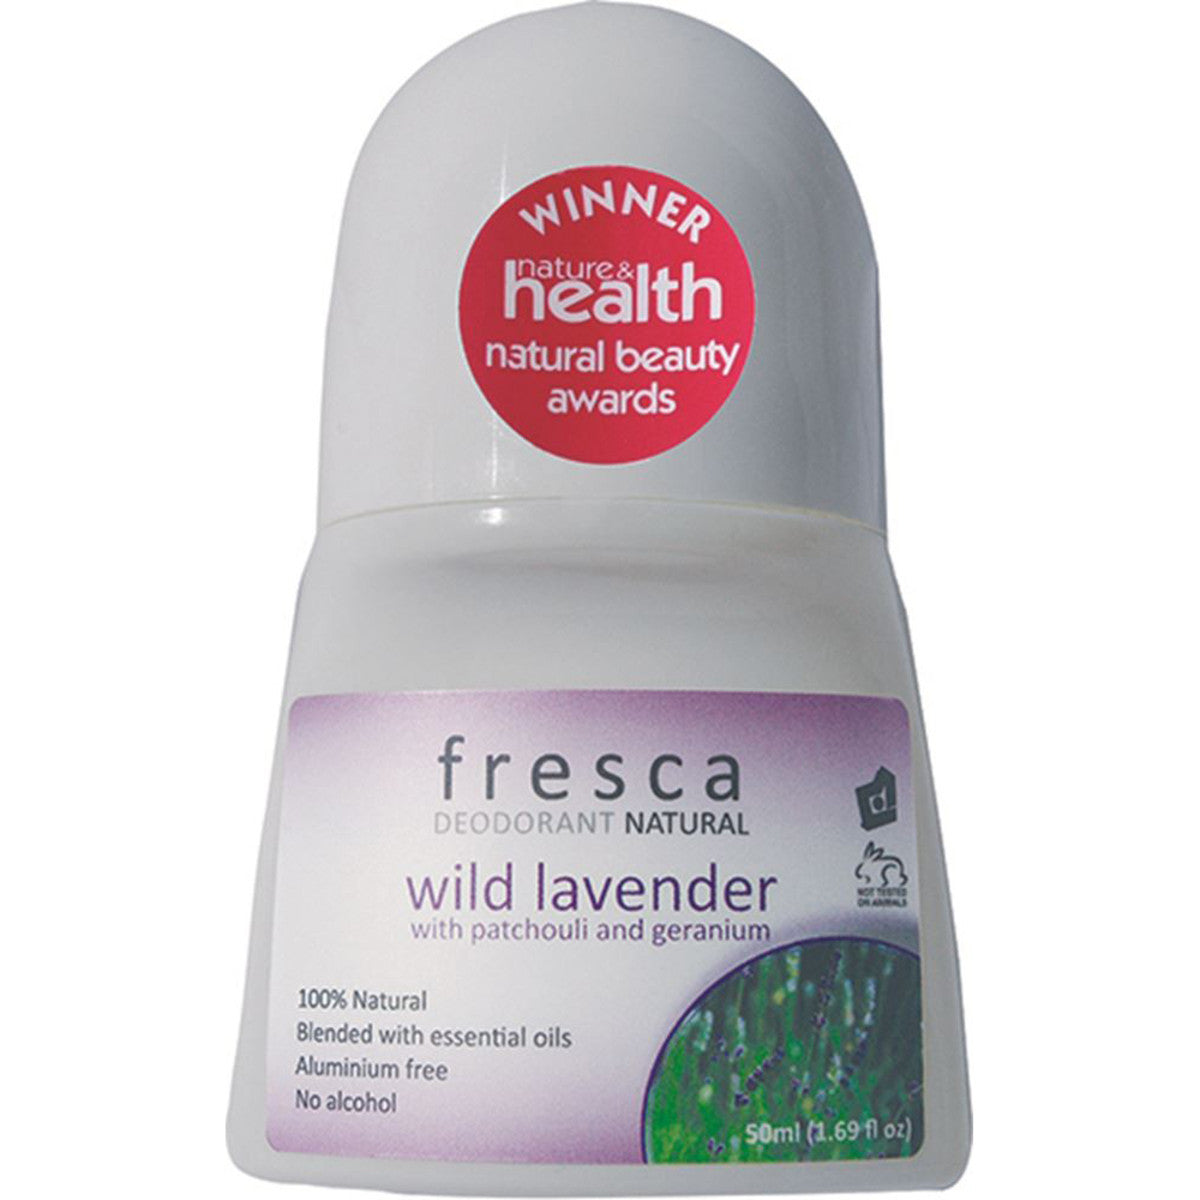 Fresca Natural - Deodorant Wild Lavender